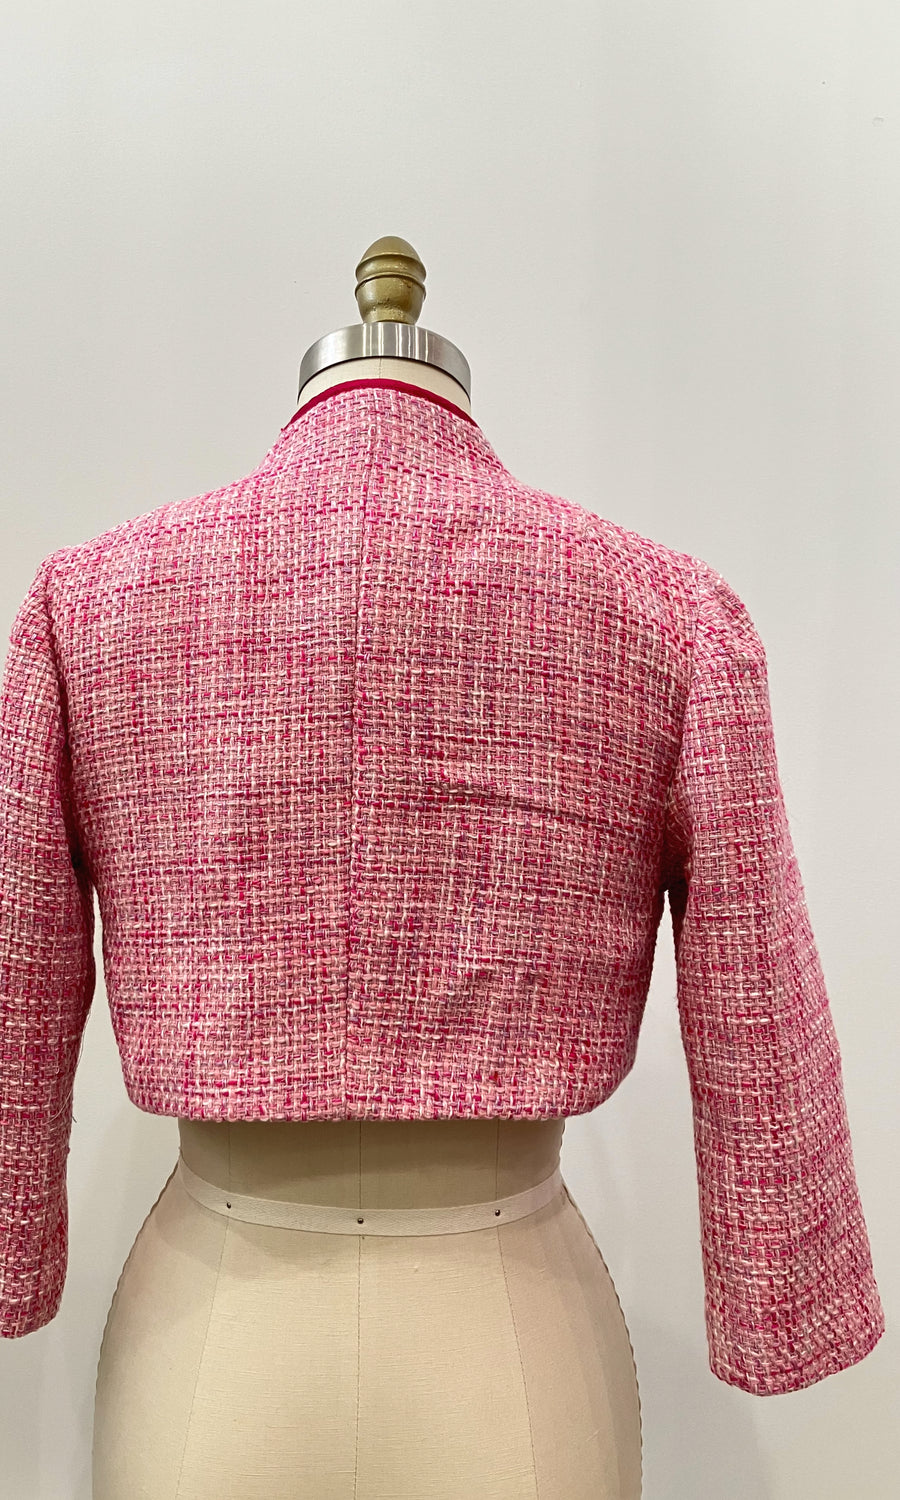 Pink Tweed Crop Jacket, size Small